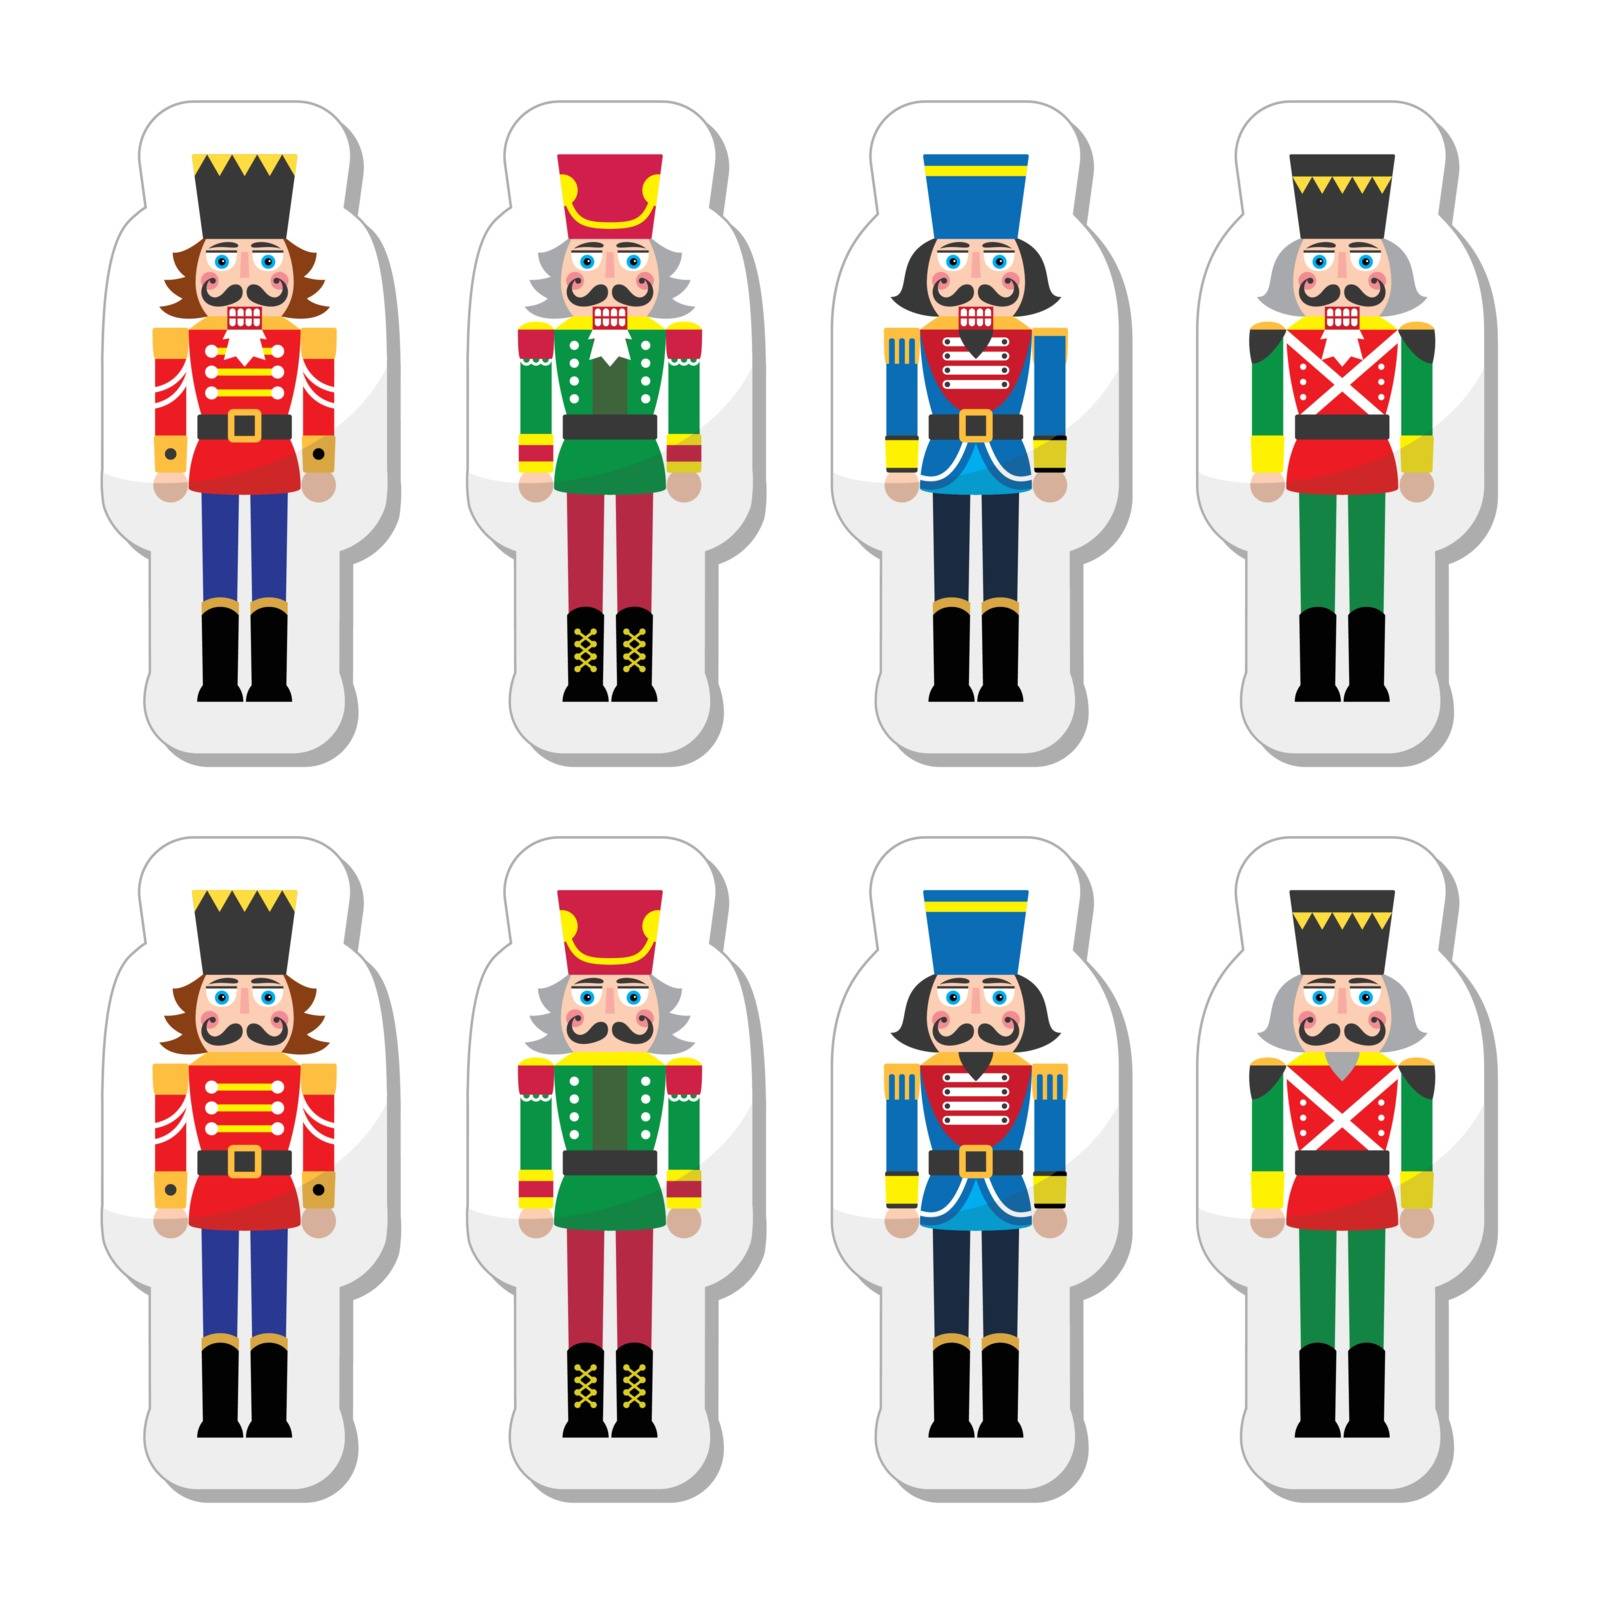 Christmas nutcracker - soldier figurine icons set by RedKoala